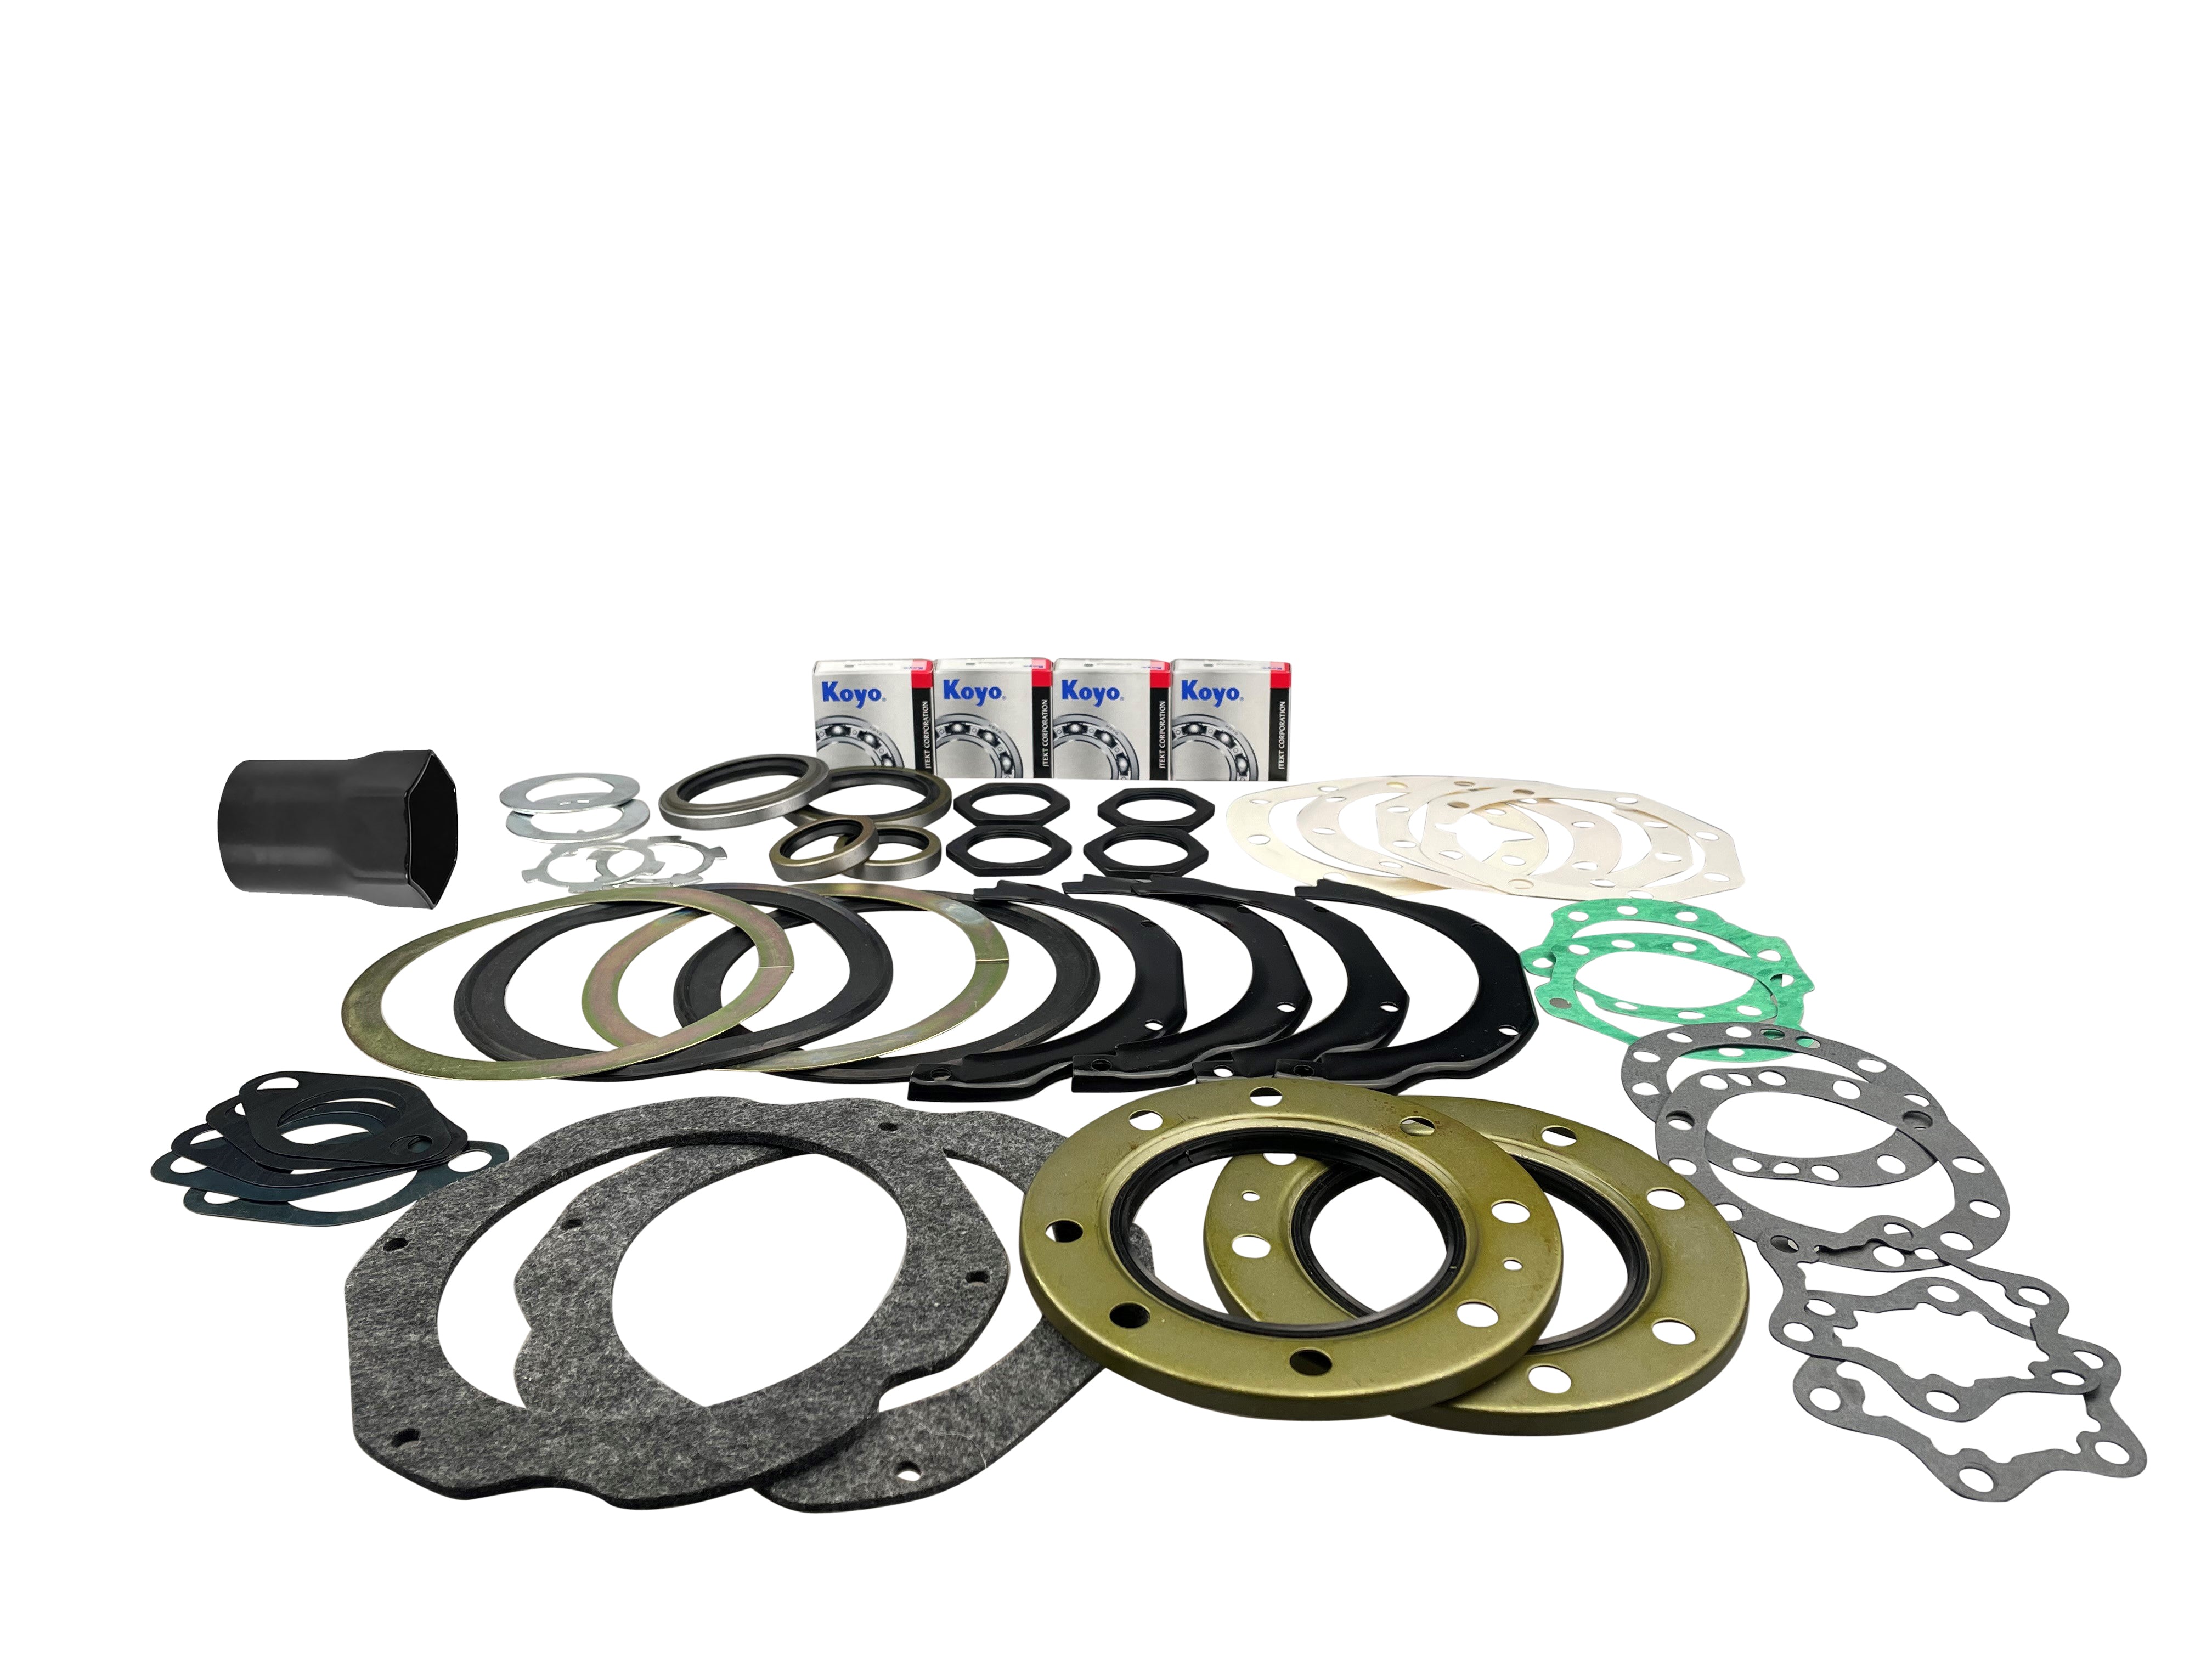 Swivel Hub Bearing & Seal Kit For Toyota Landcruiser 76 78 79 80 100 105 Series